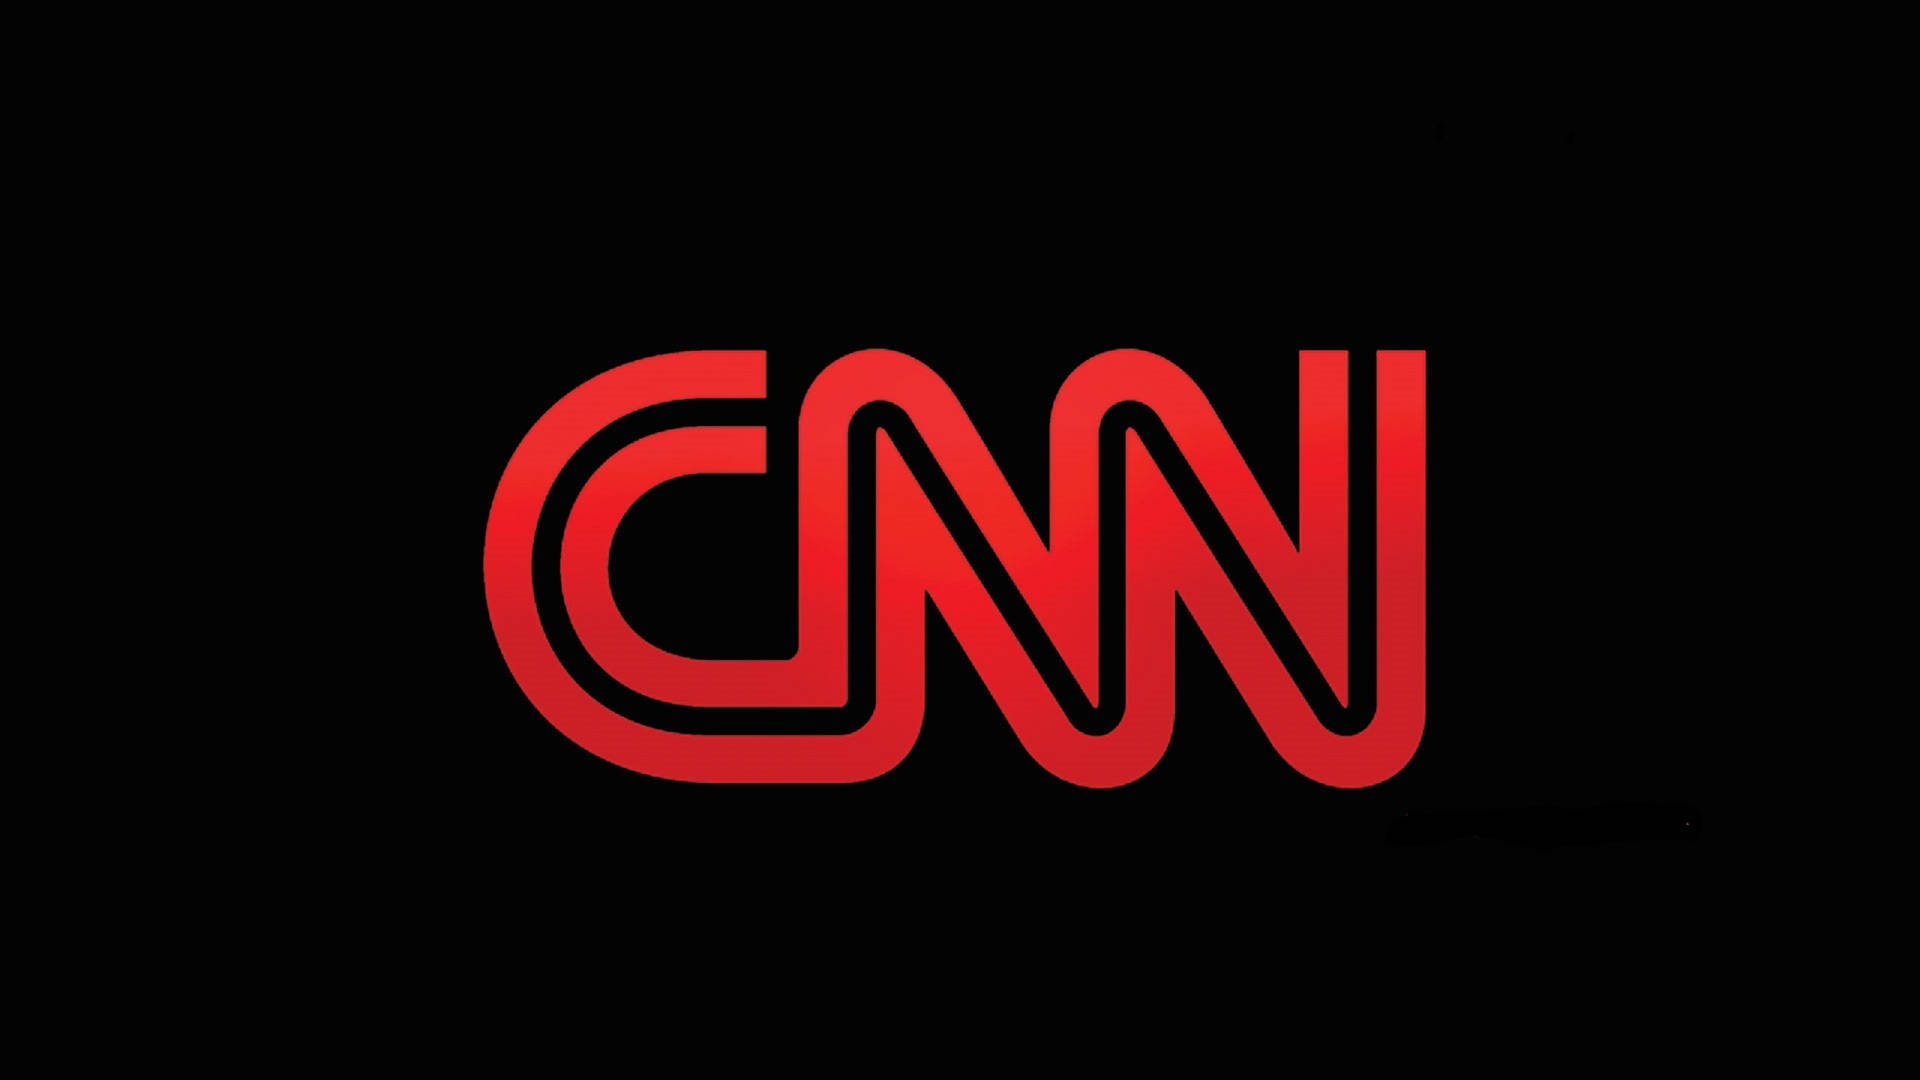 Cnn Media Television Channel Background